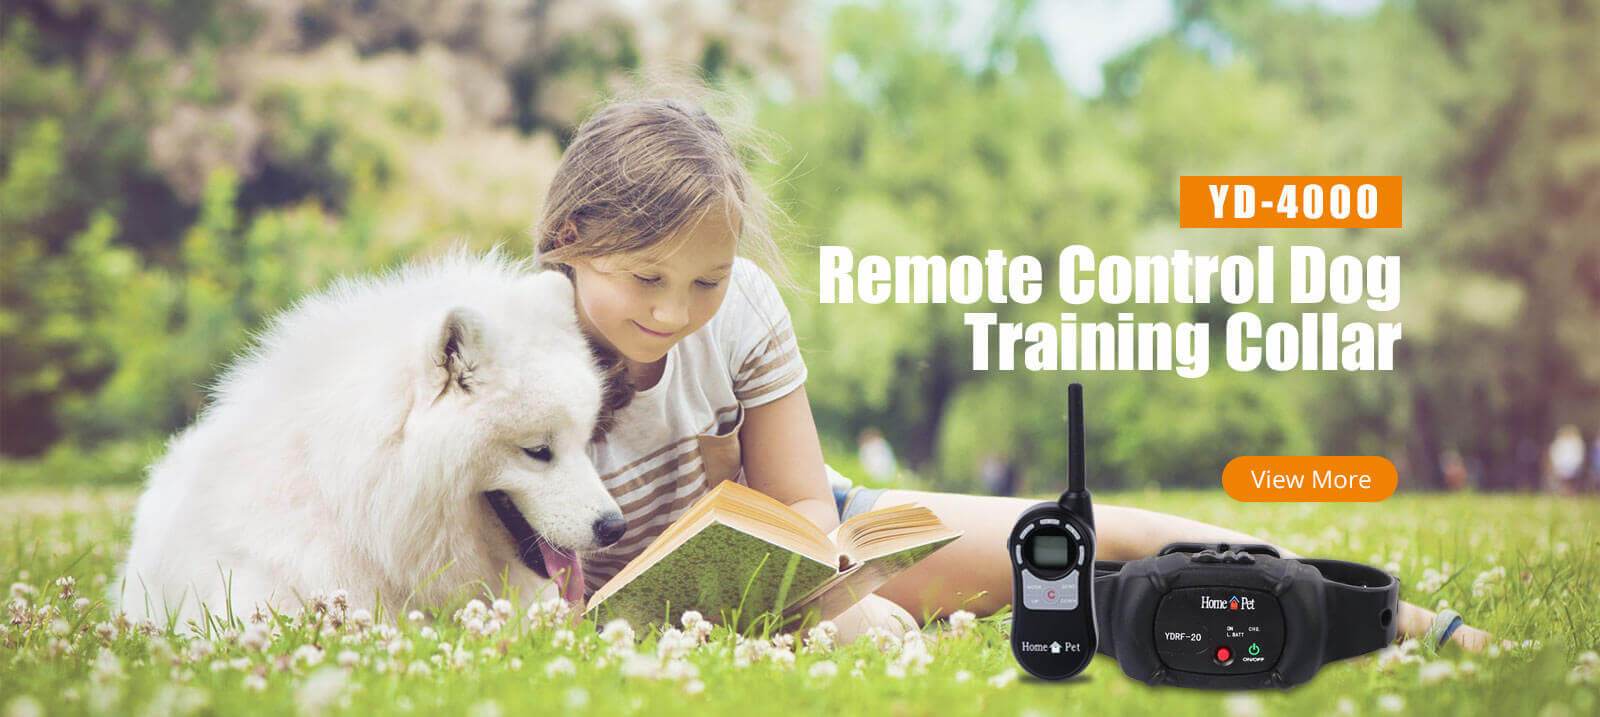 Remote Control Dog Training Collar